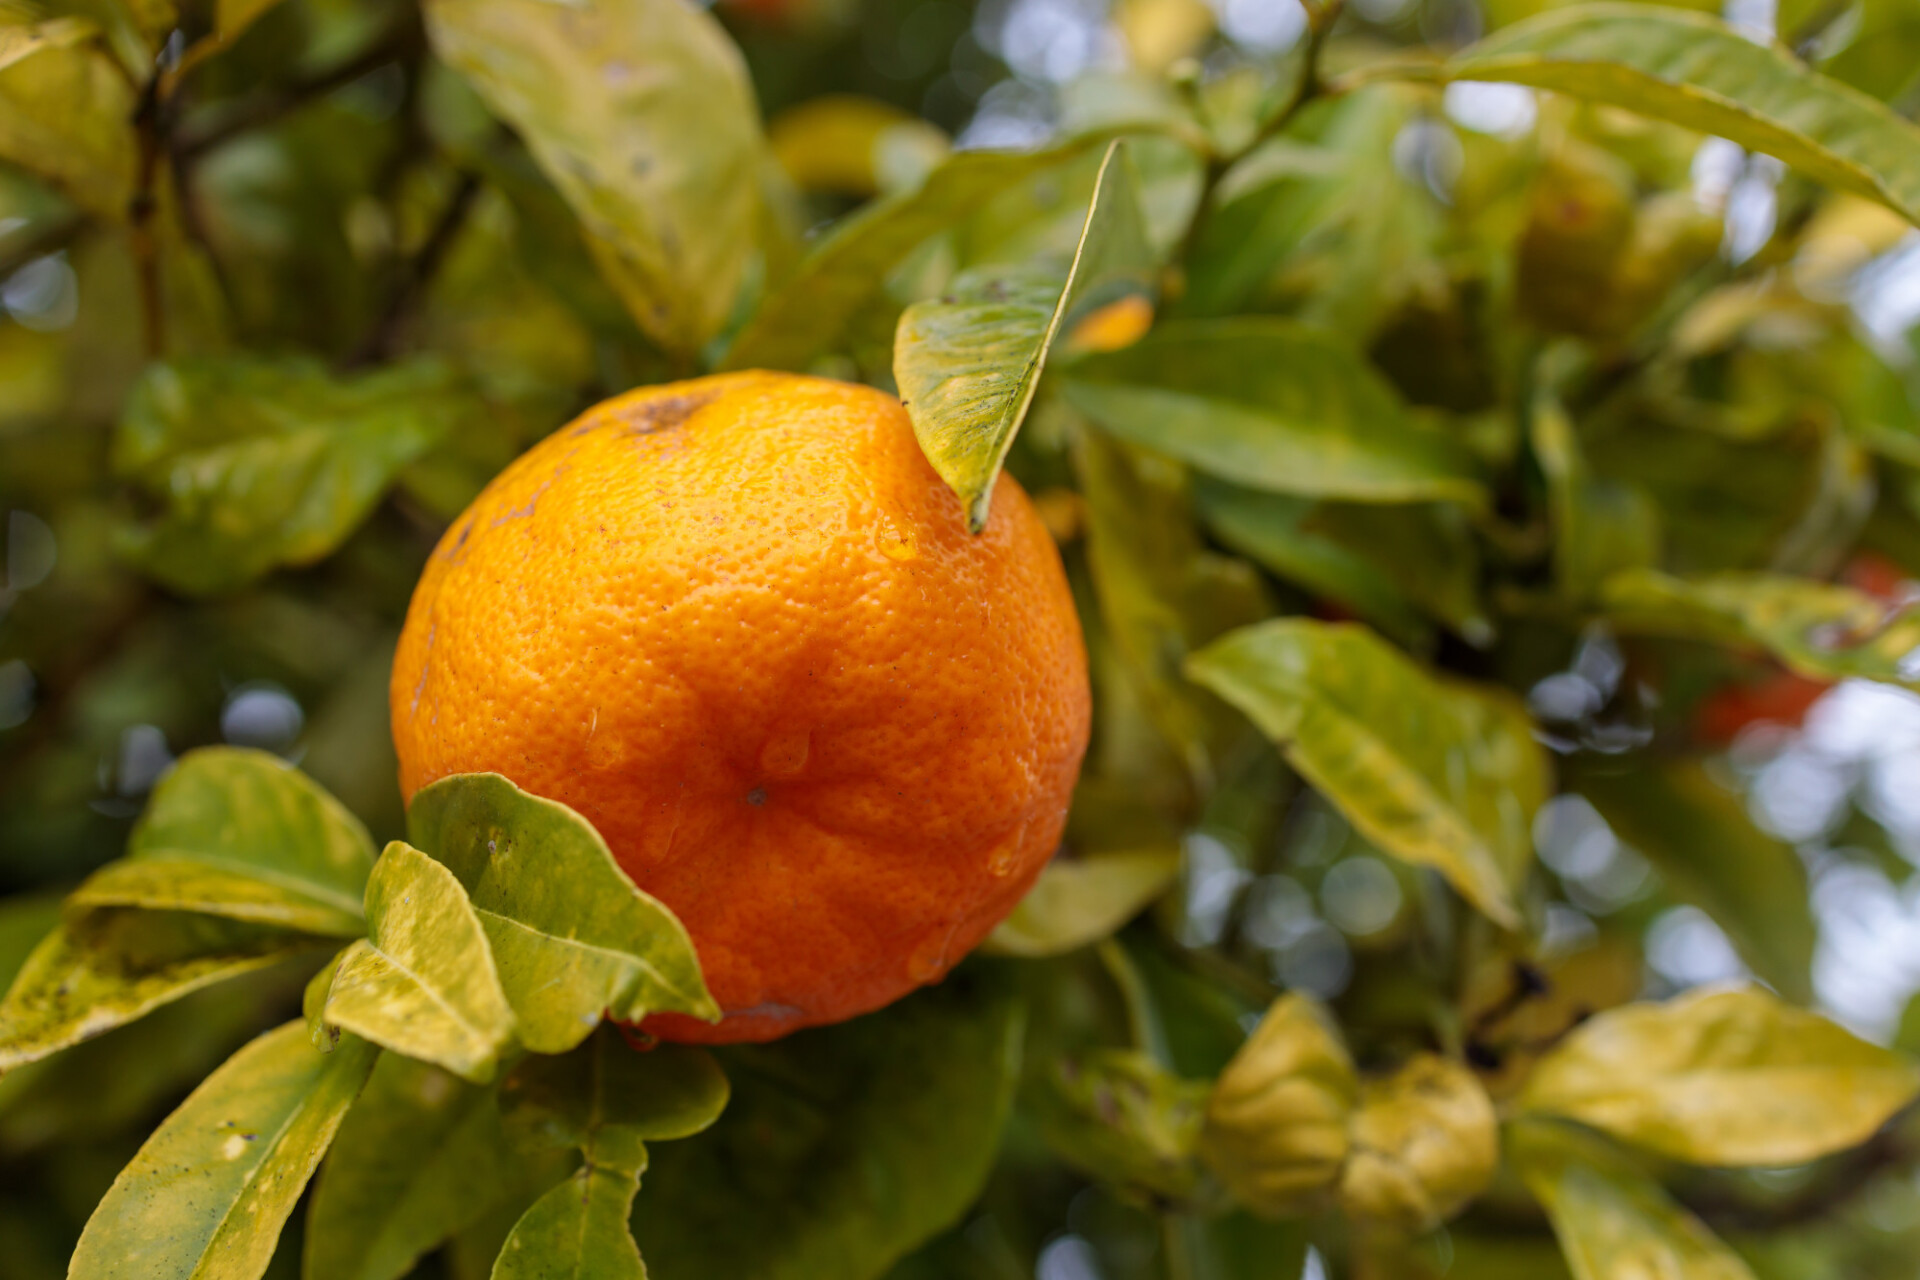 A fresh ripe orange on the tree in Portugal